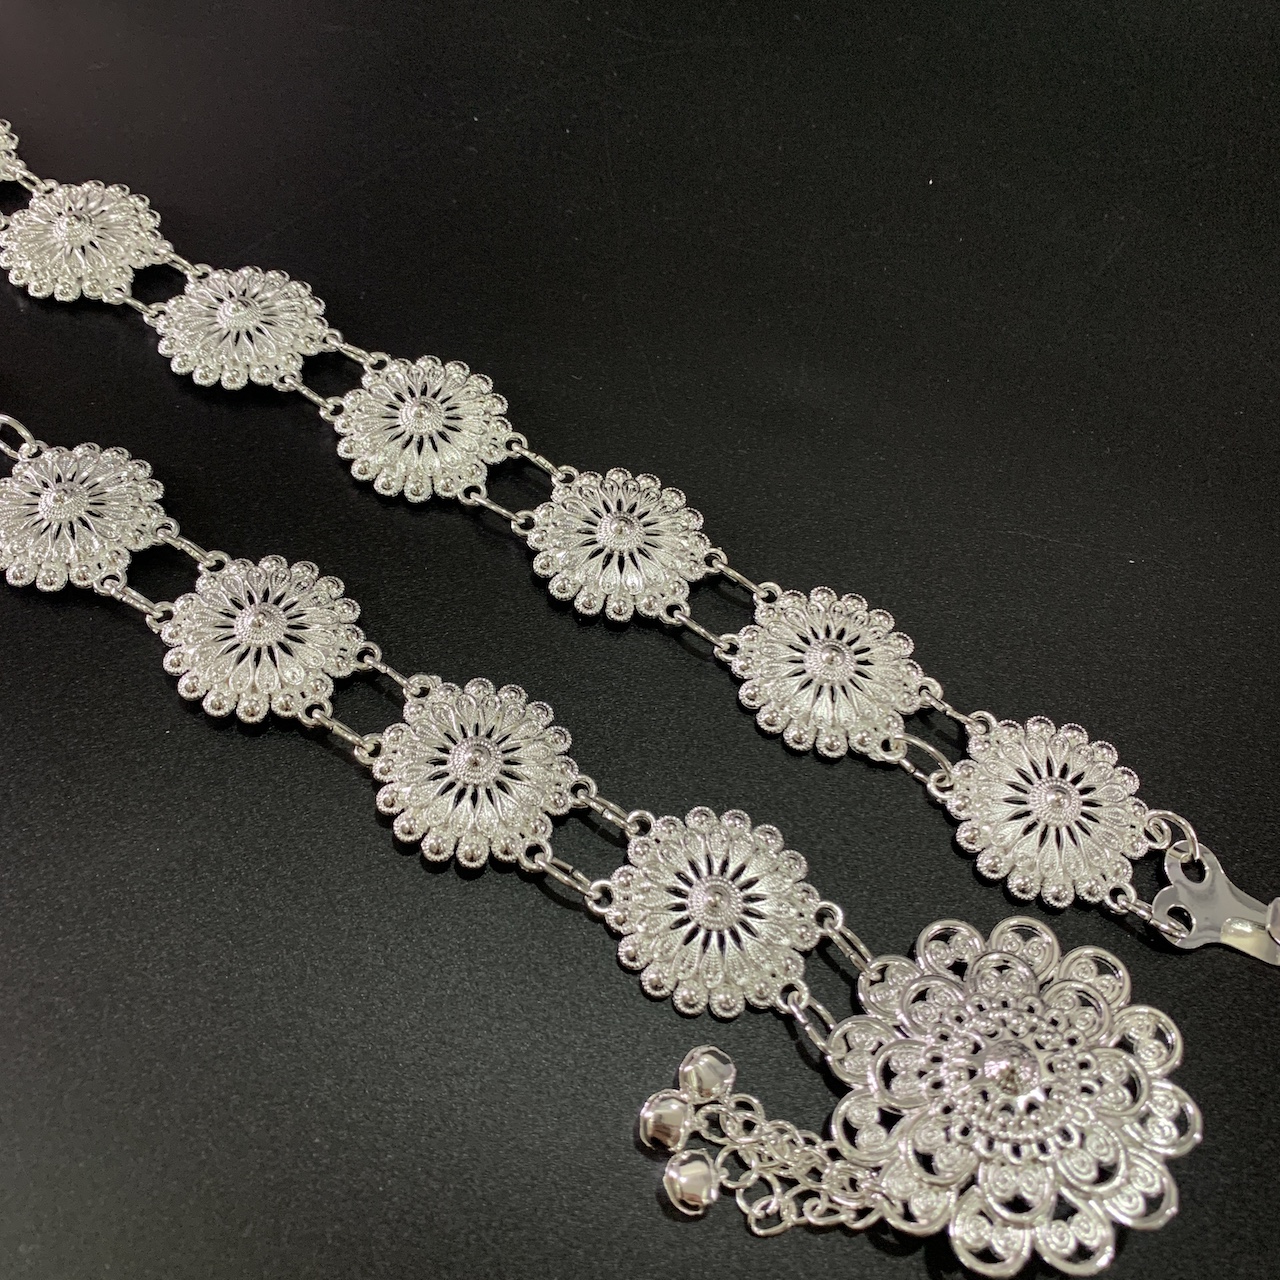 Vintage jewelry เครืองประดับโบราณเข็มขัดดอกไม้อีสานชุดล้านนาไทหัวเข็มขัด สีเงิน thai belts